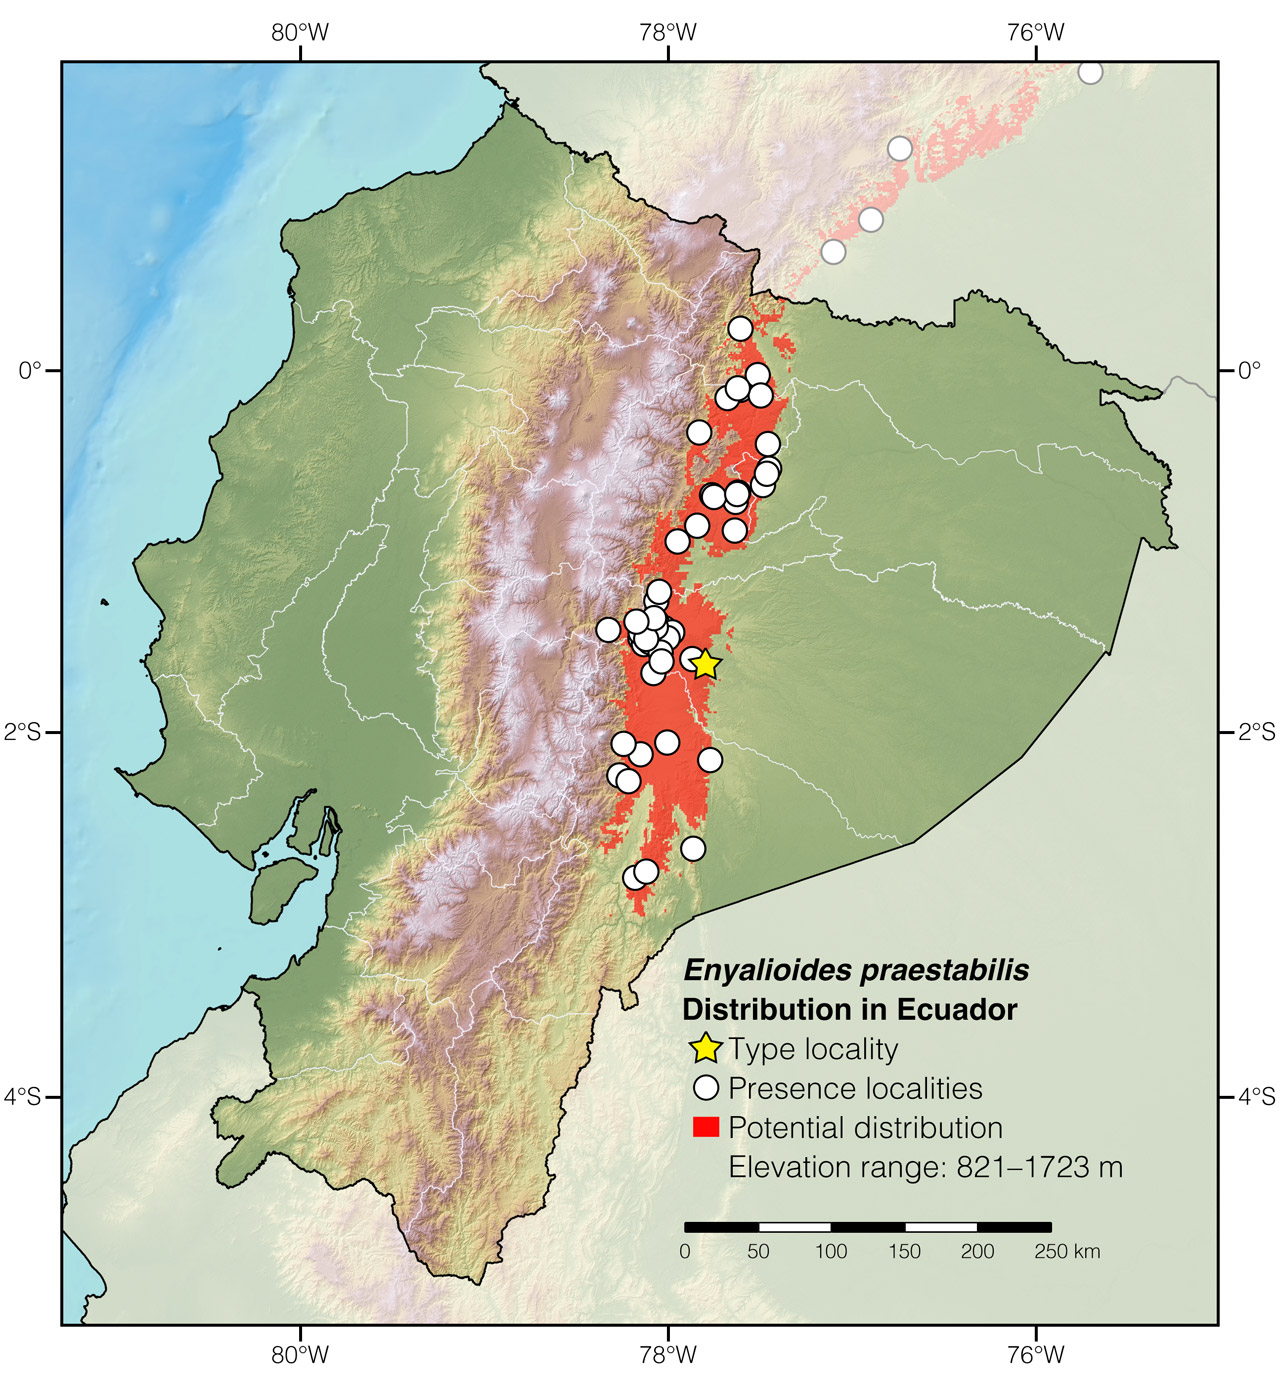 Distribution of Enyalioides praestabilis in Ecuador